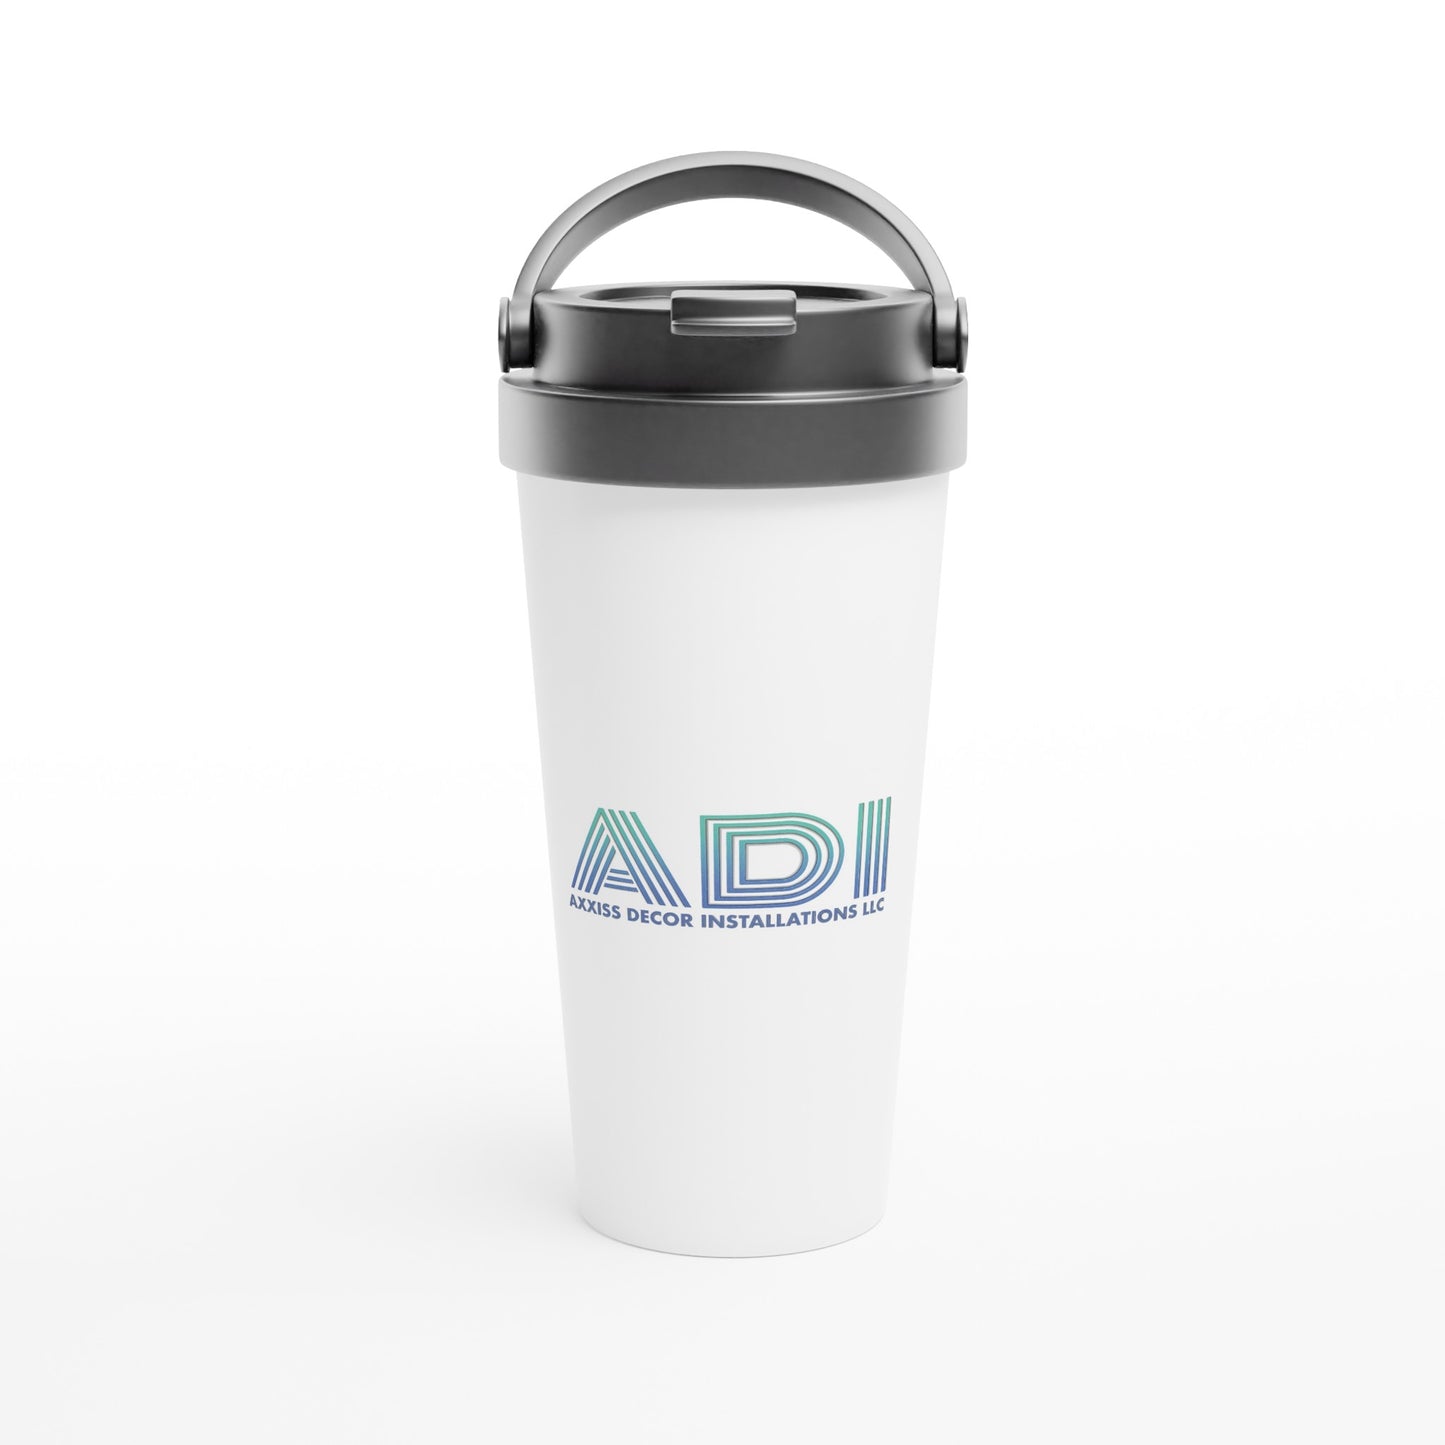 ADI-Axxis Decor Installations, LLC - White 15oz Stainless Steel Travel Mug